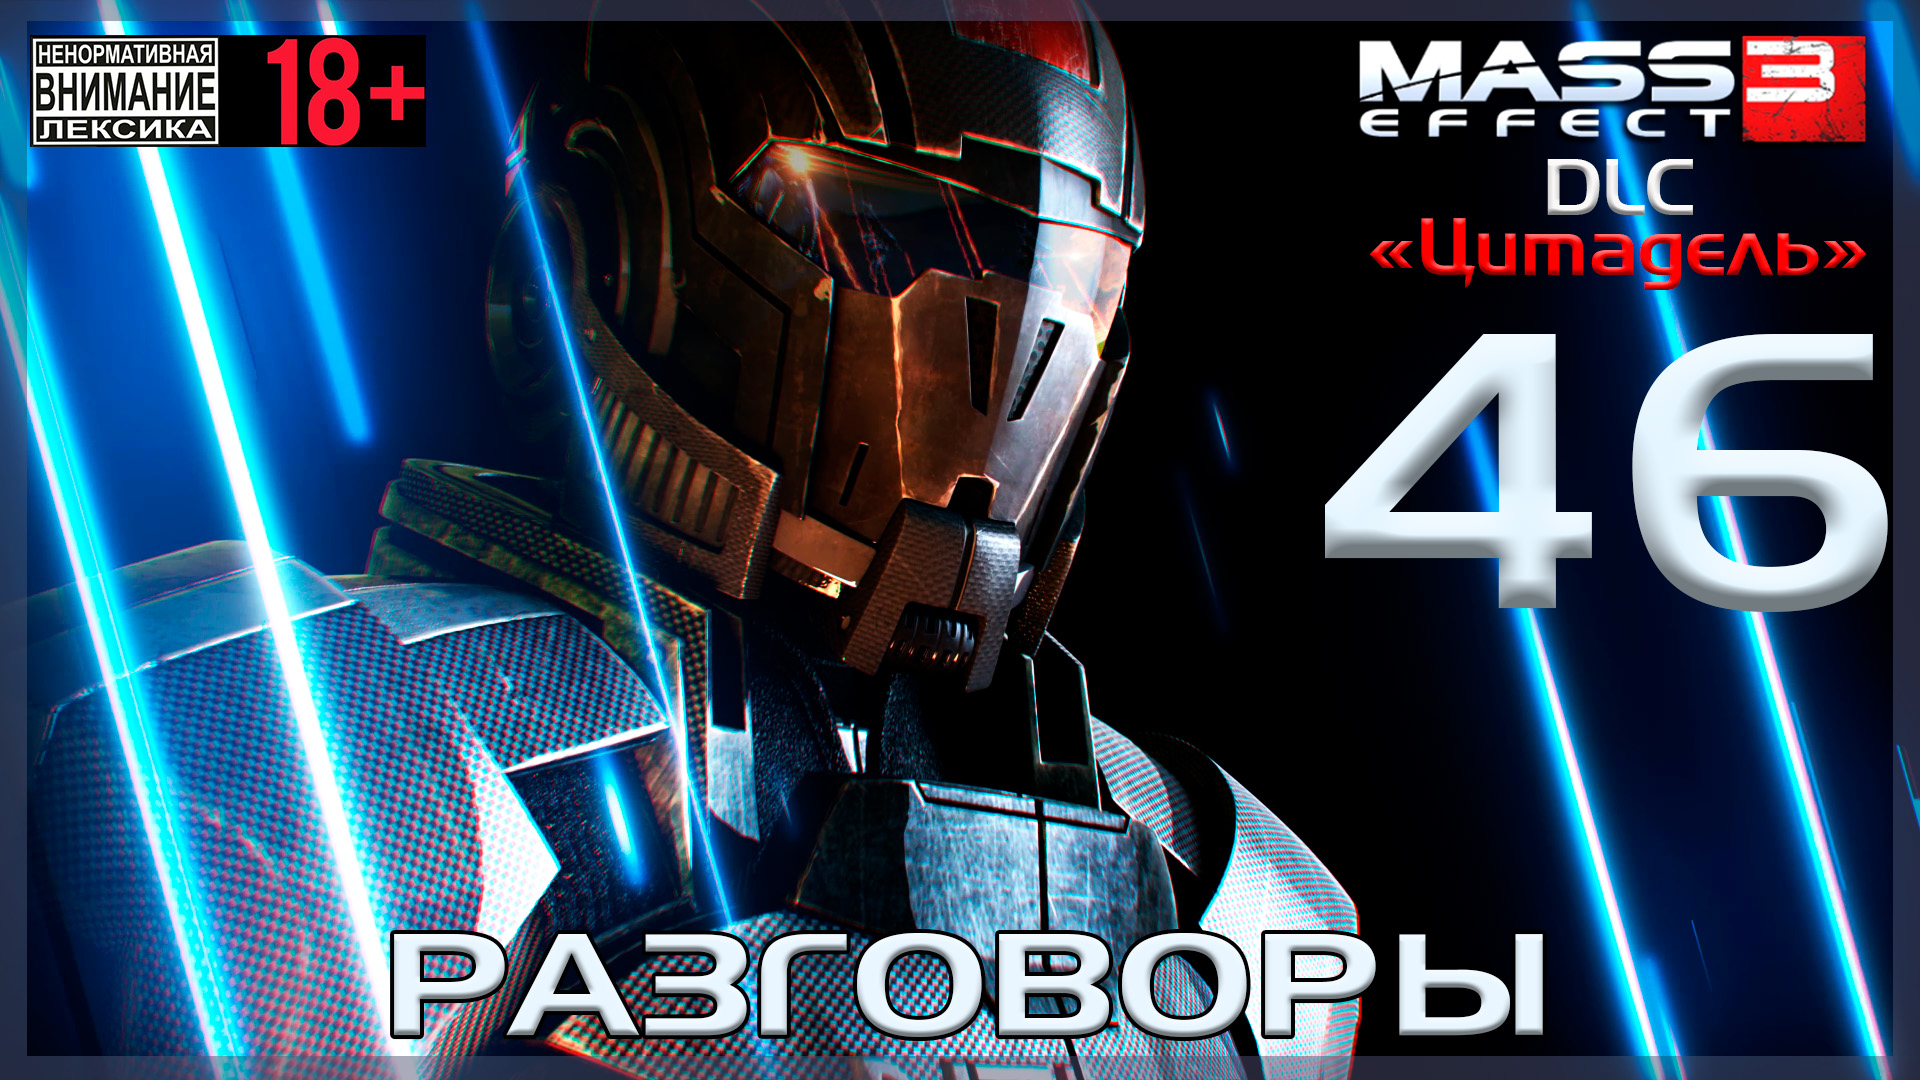 Mass Effect 3 - DLC Цитадель / Original #46 Разговоры